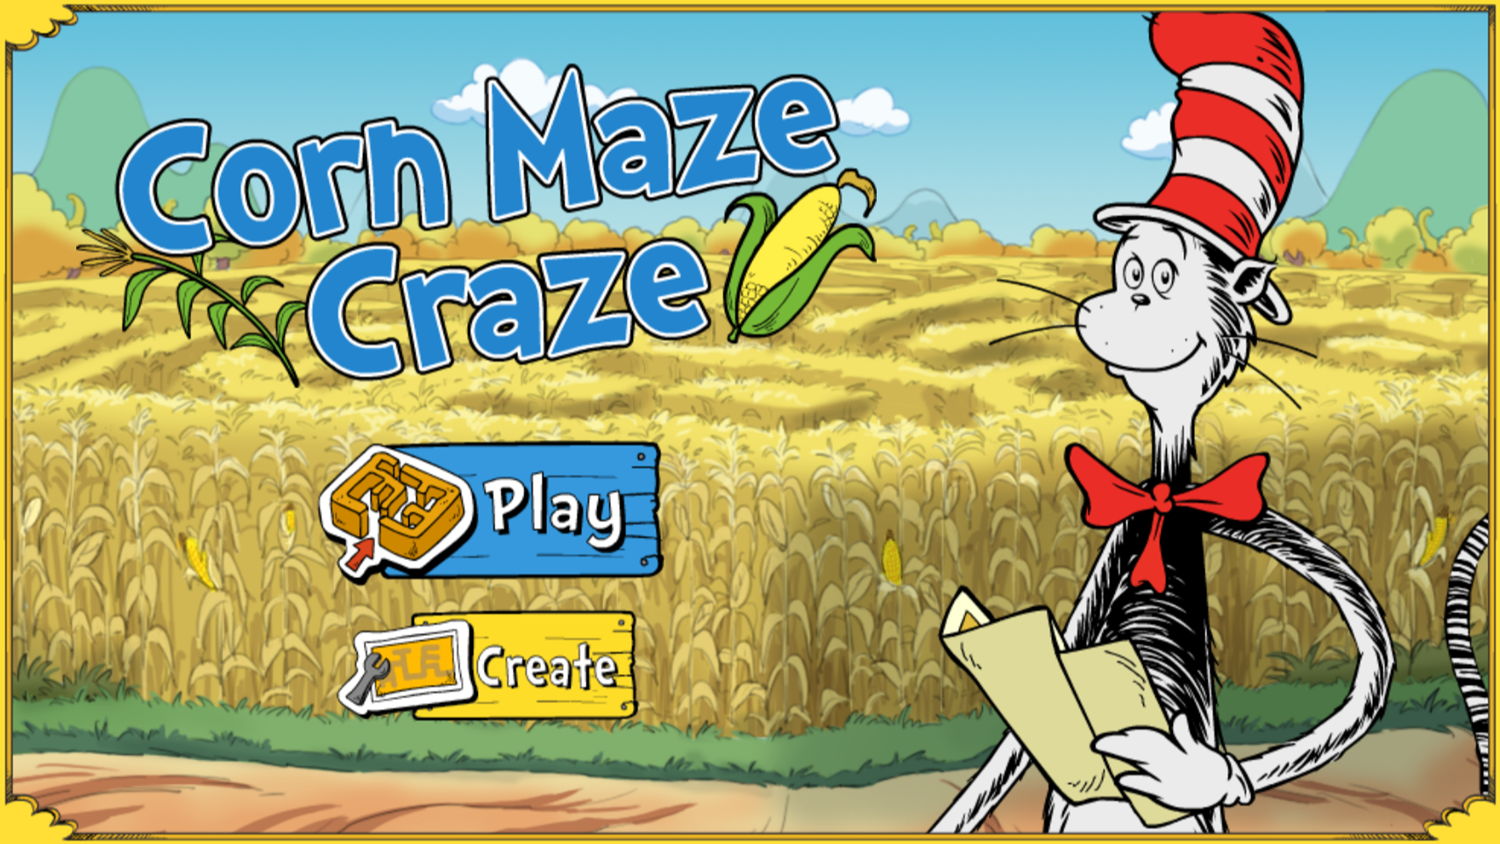 The Cat in the Hat Corn Maze Craze Game Welcome Screen Screenshot.